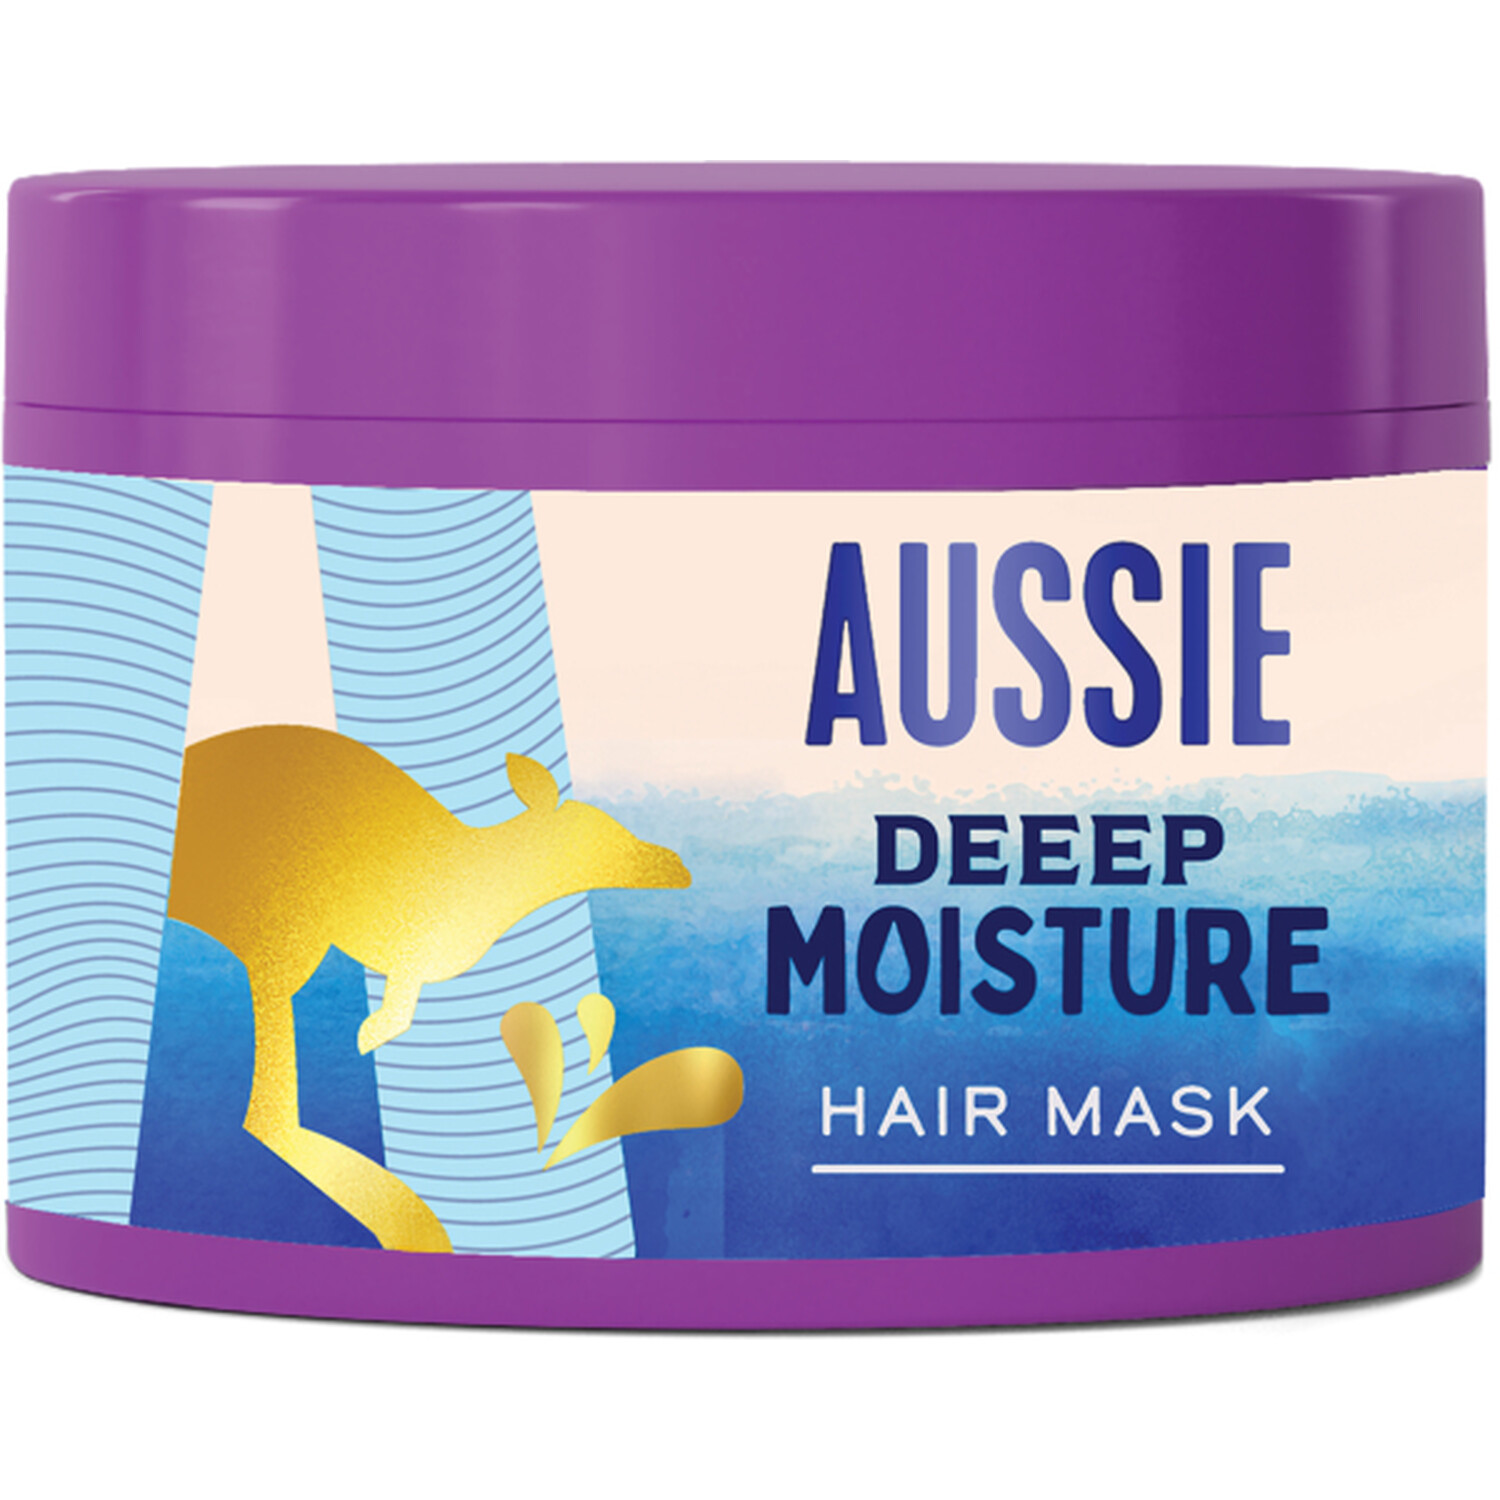 Aussie Deep Moisture Hair Mask 300ml - Purple Image